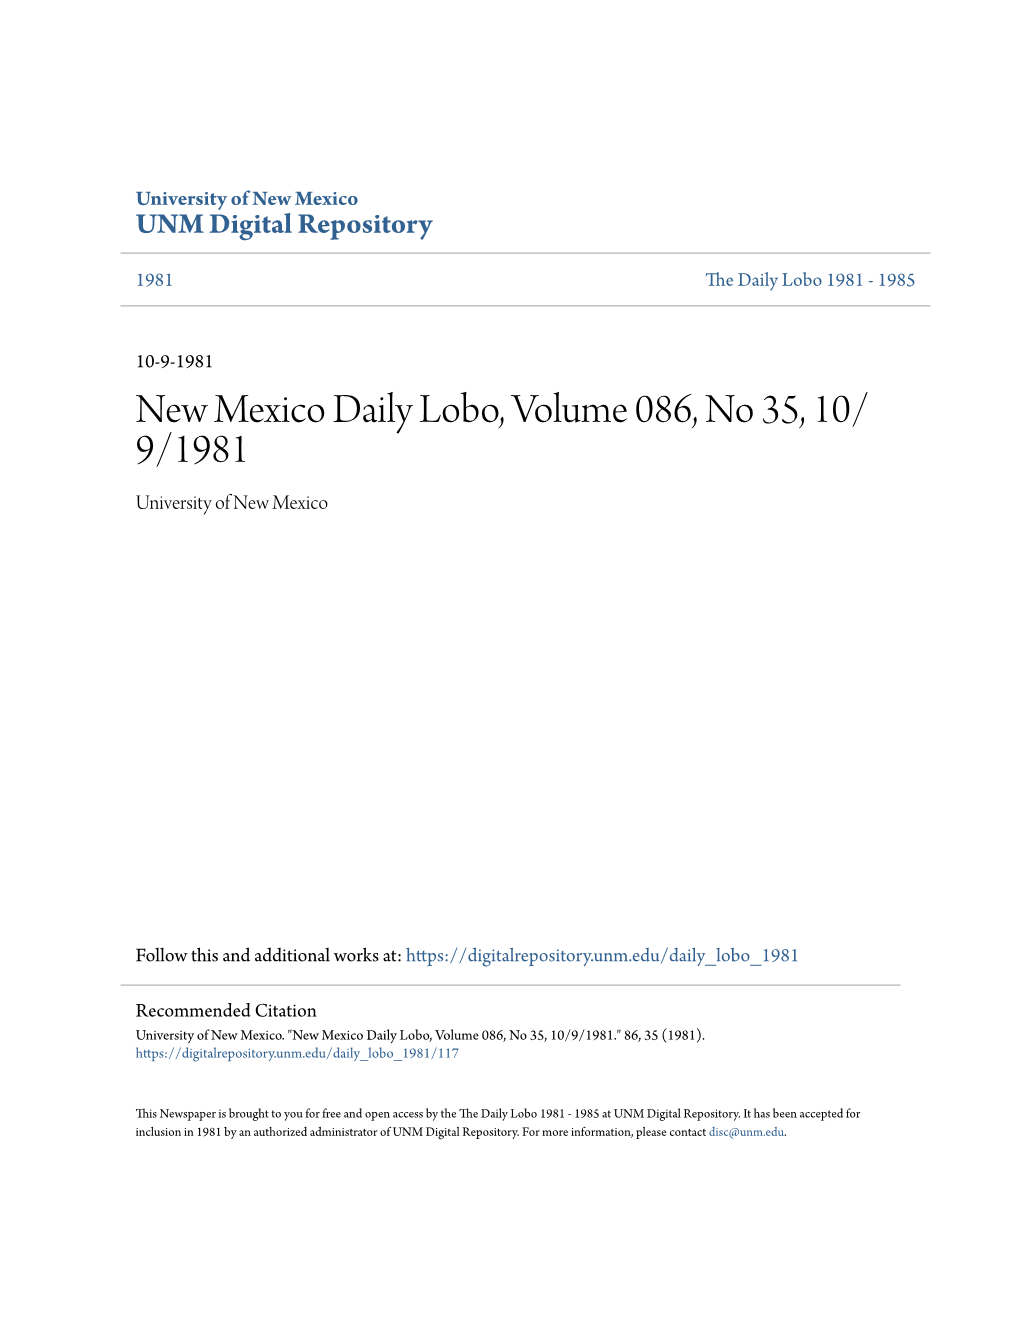 New Mexico Daily Lobo, Volume 086, No 35, 10/9/1981." 86, 35 (1981)